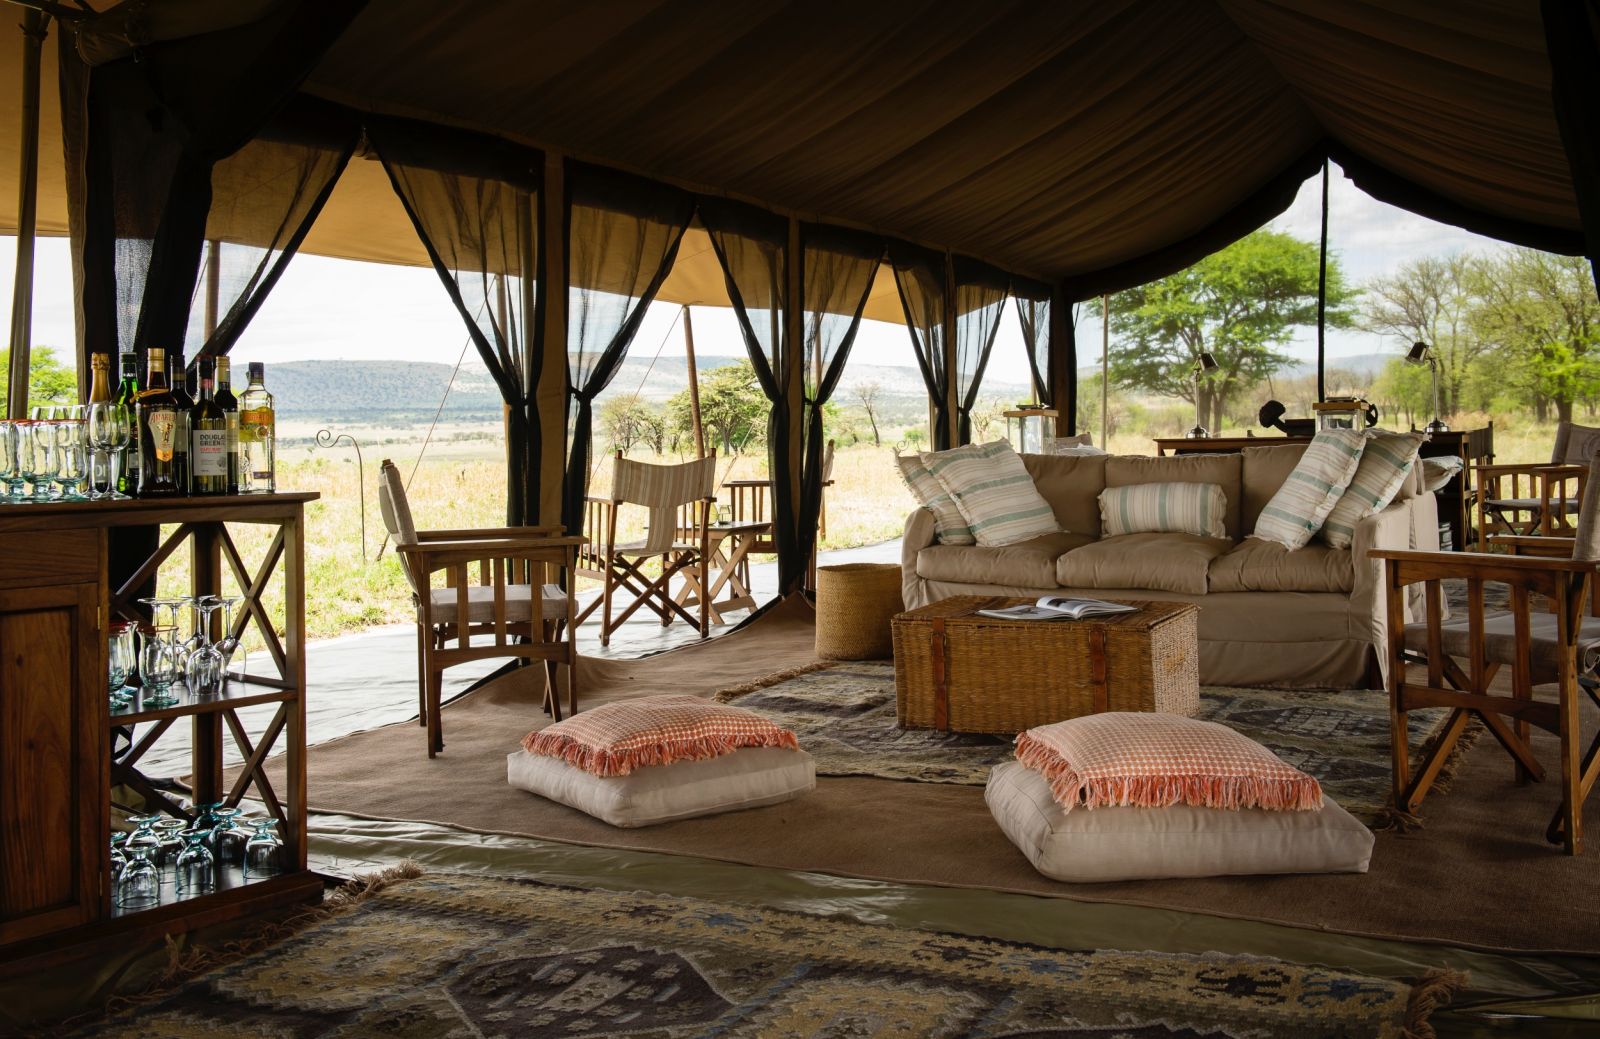 Sitting area and bar tent at Serengeti Safari Camp in Tanzania 